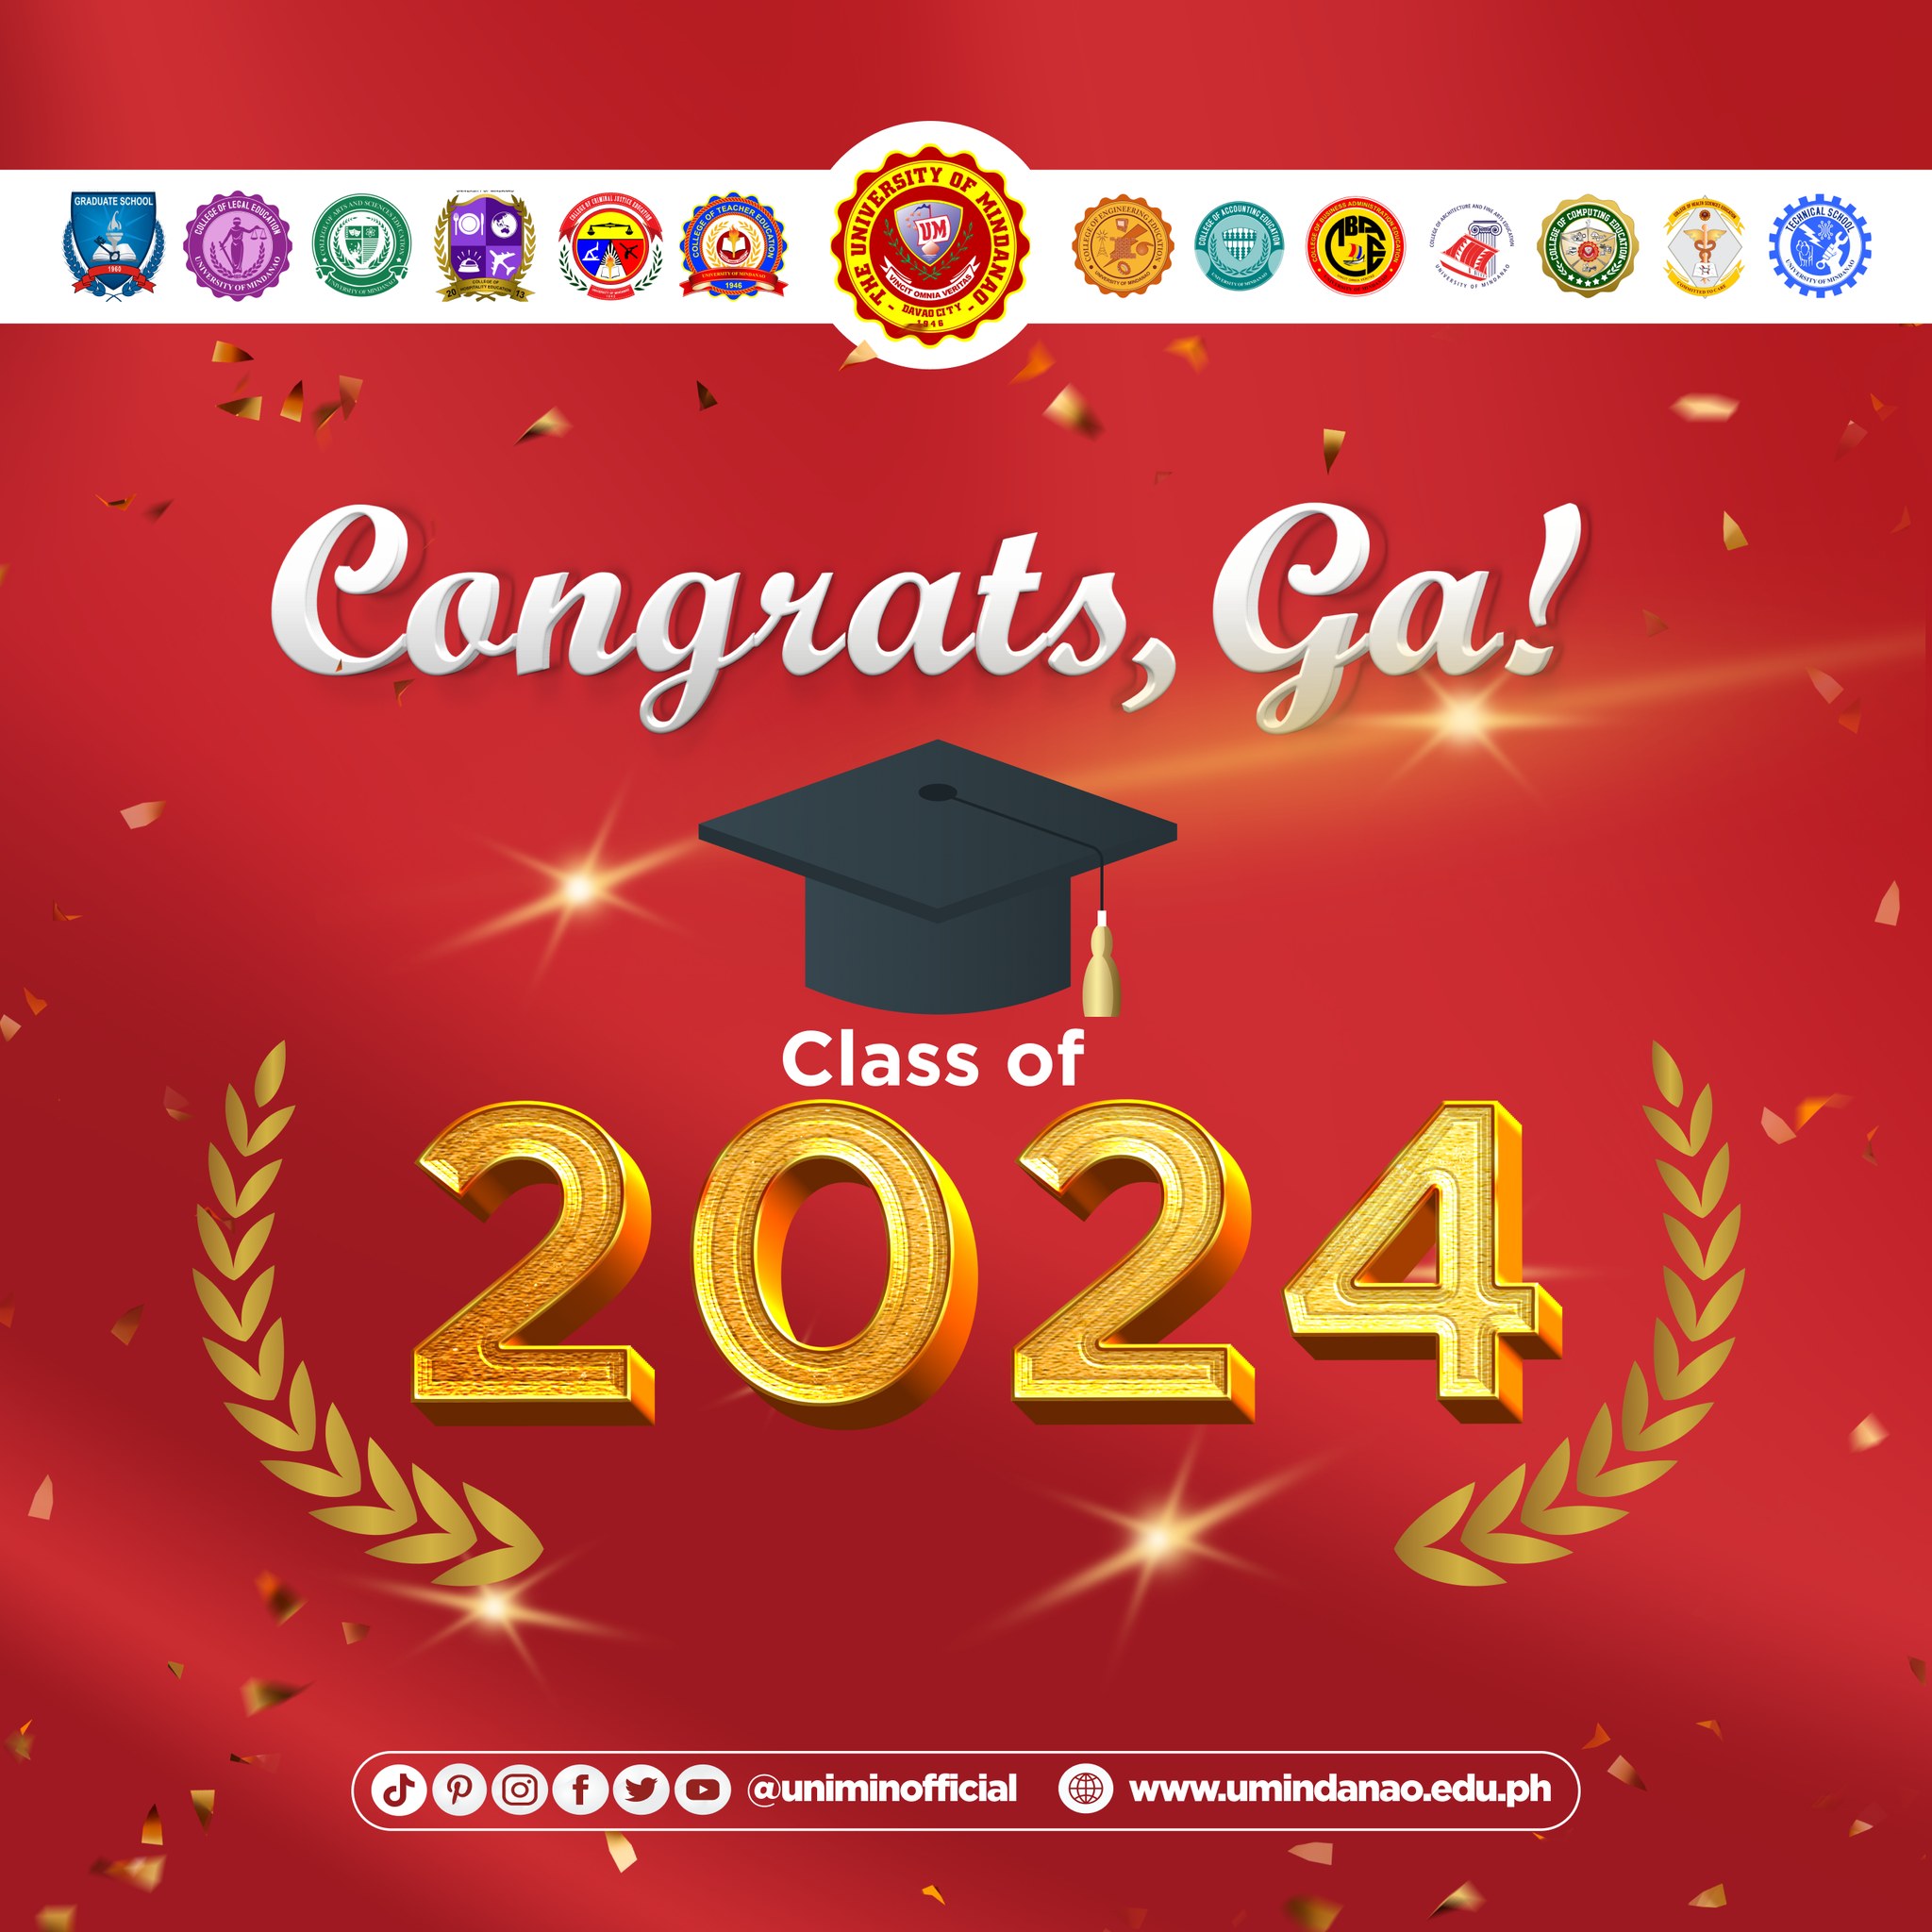 Congratulations, Class of 2024!